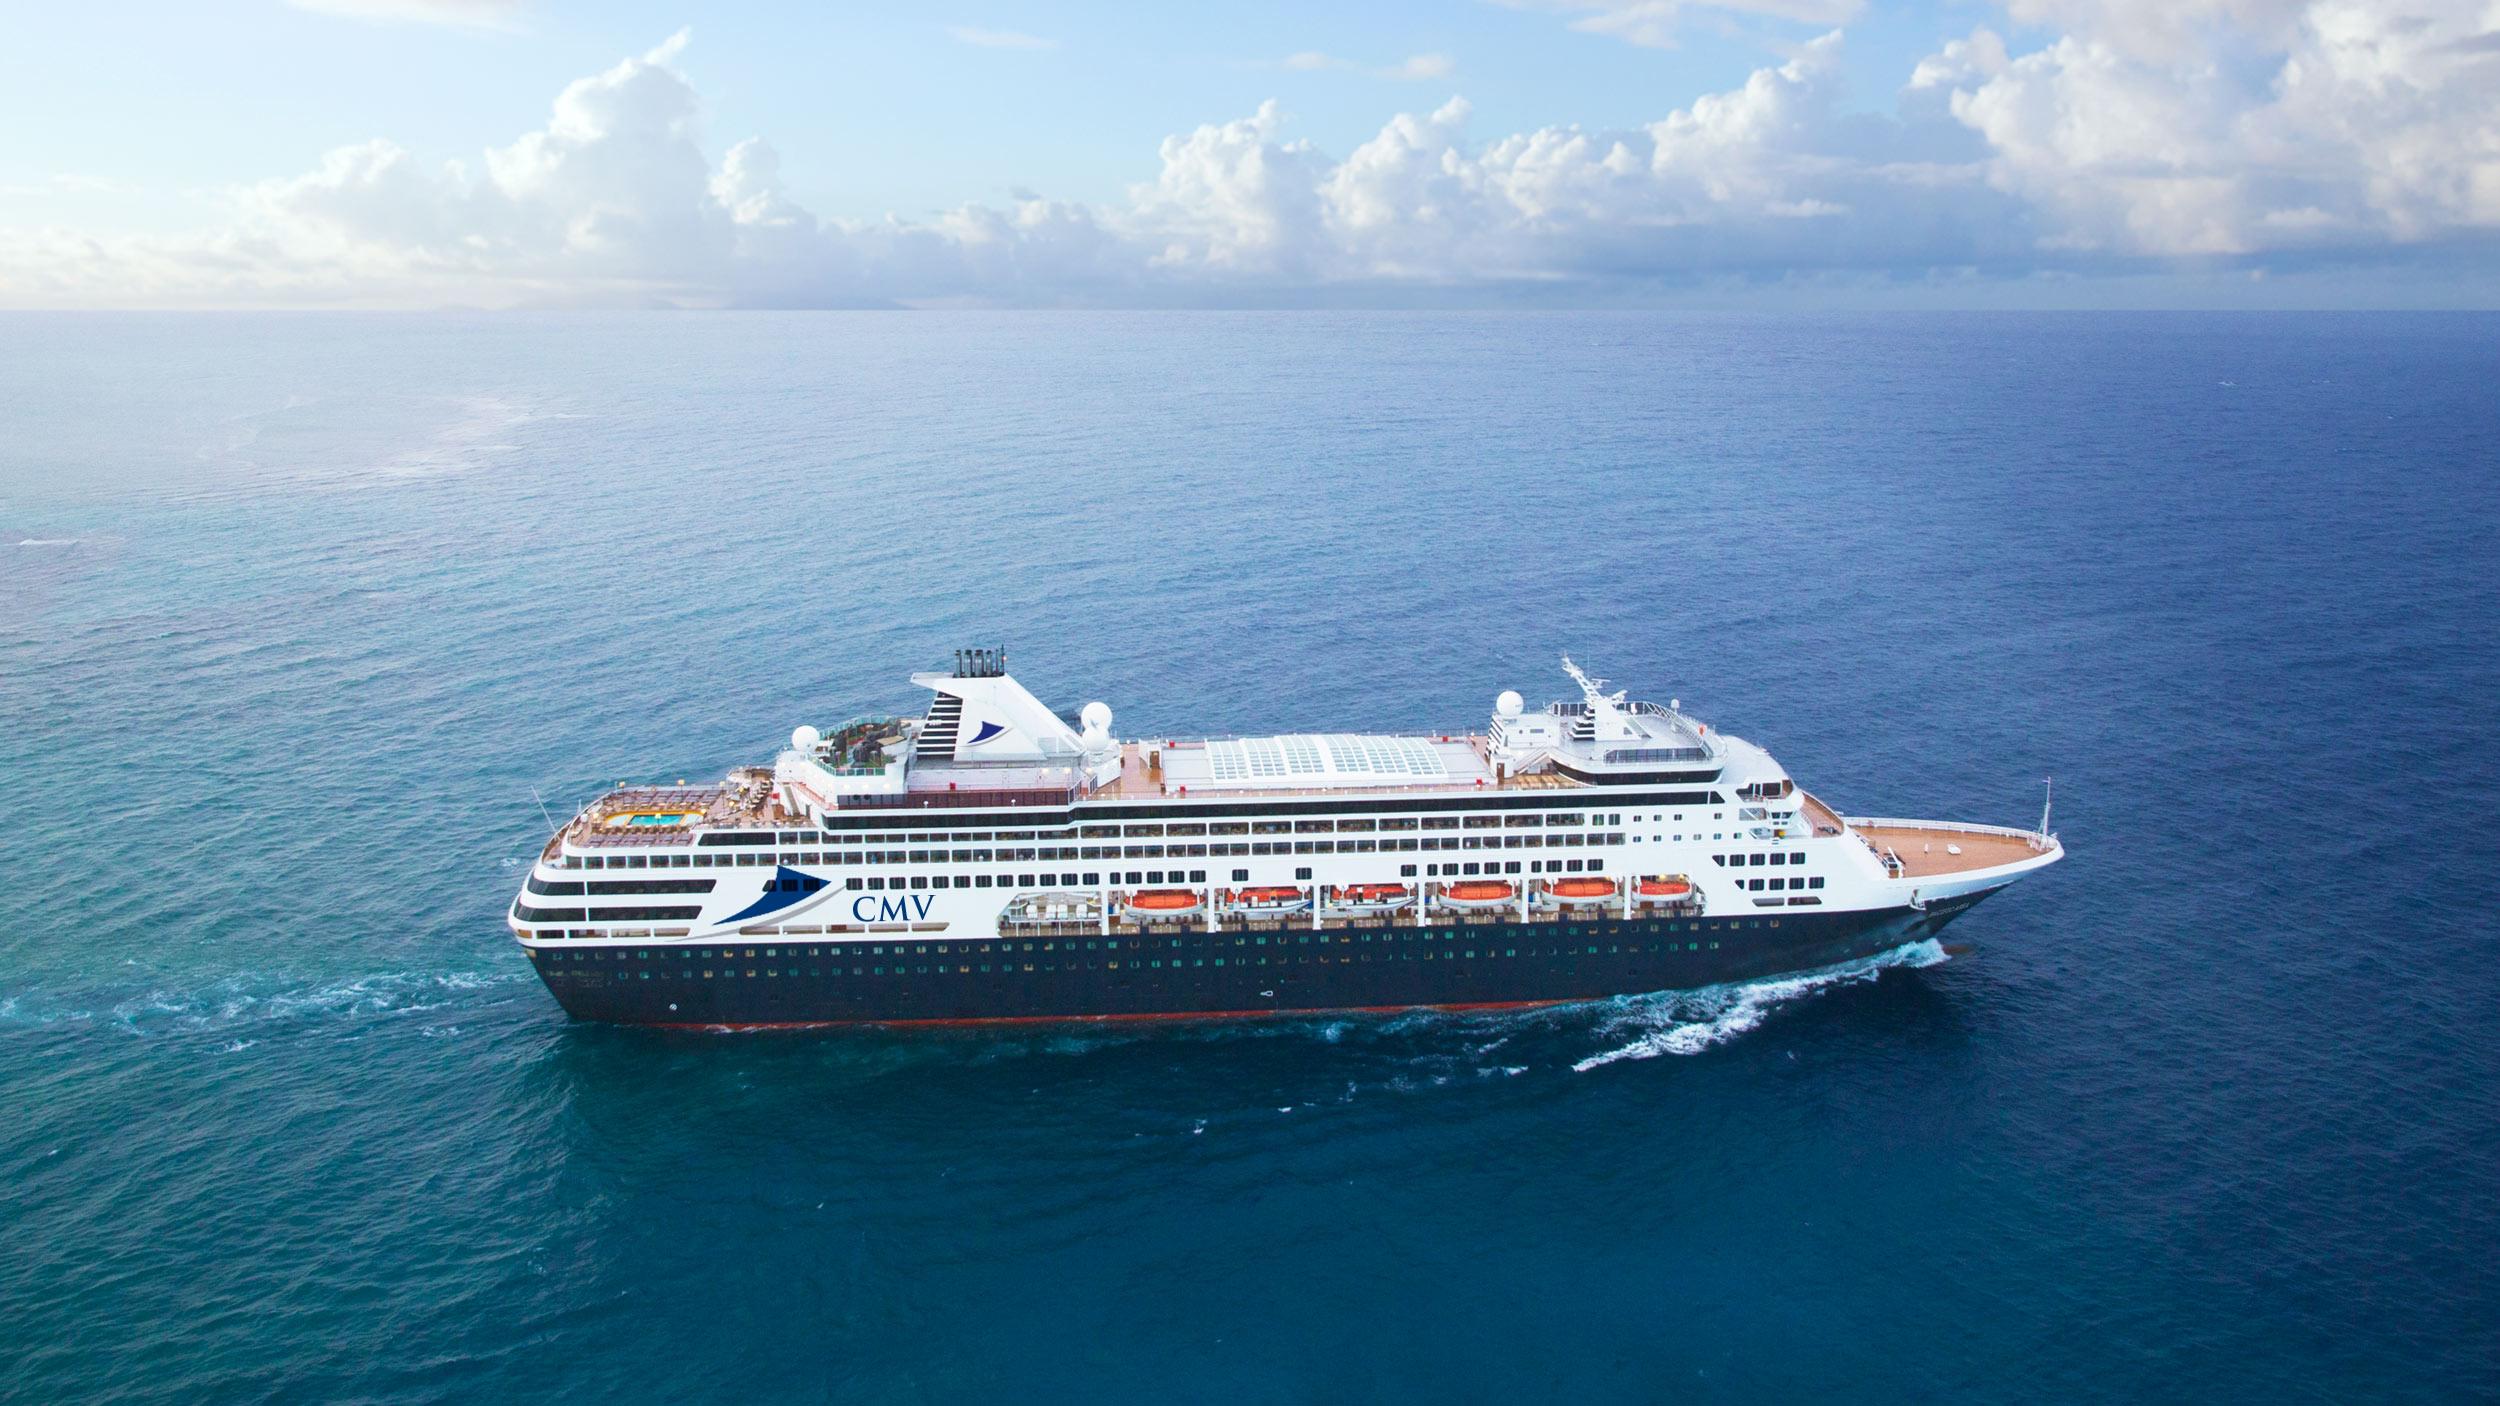 CMV names its newest ship Vasco da Gama